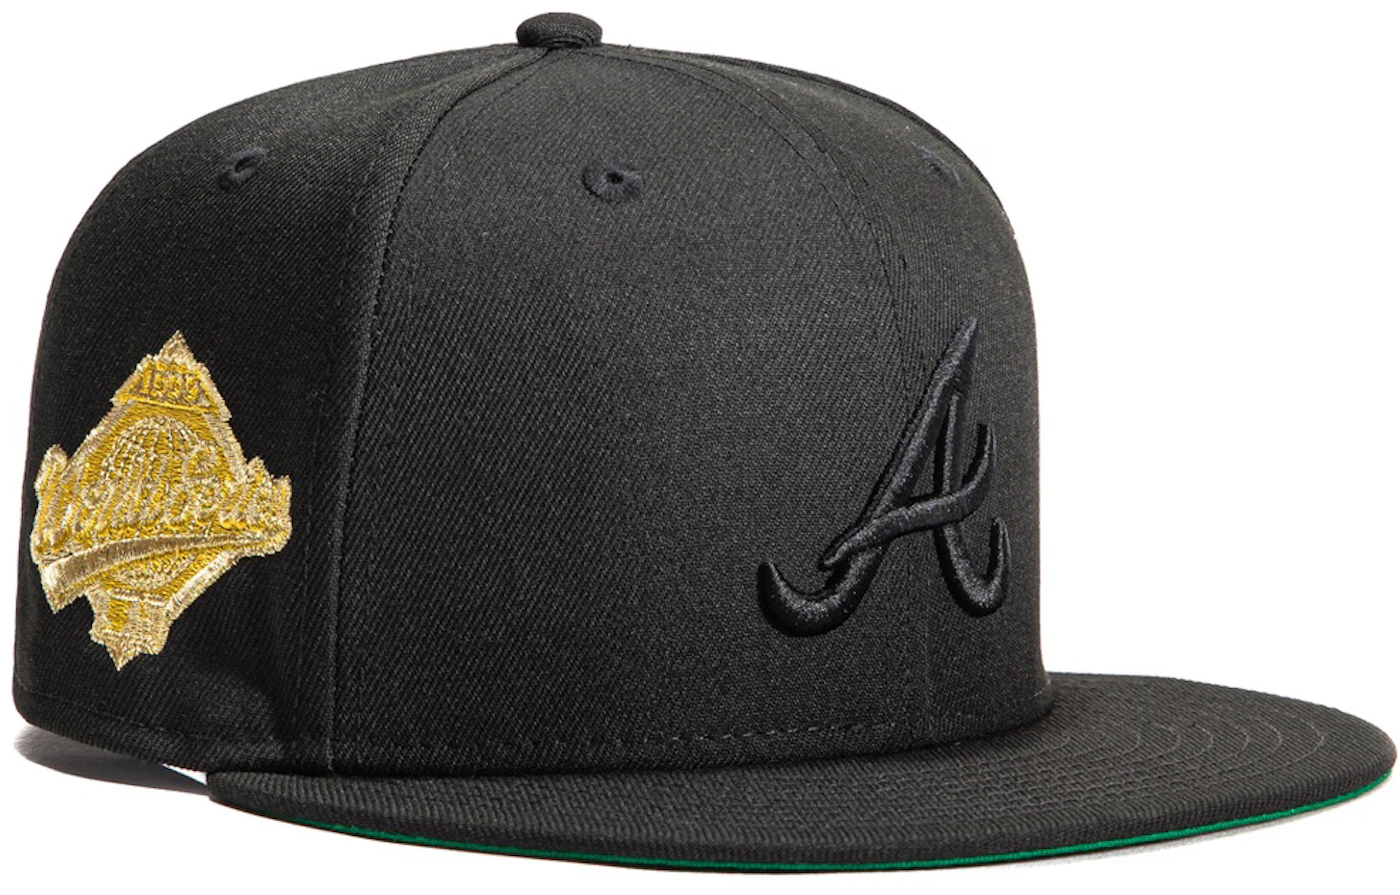 Apple Jacks Atlanta Braves Fitted Hat